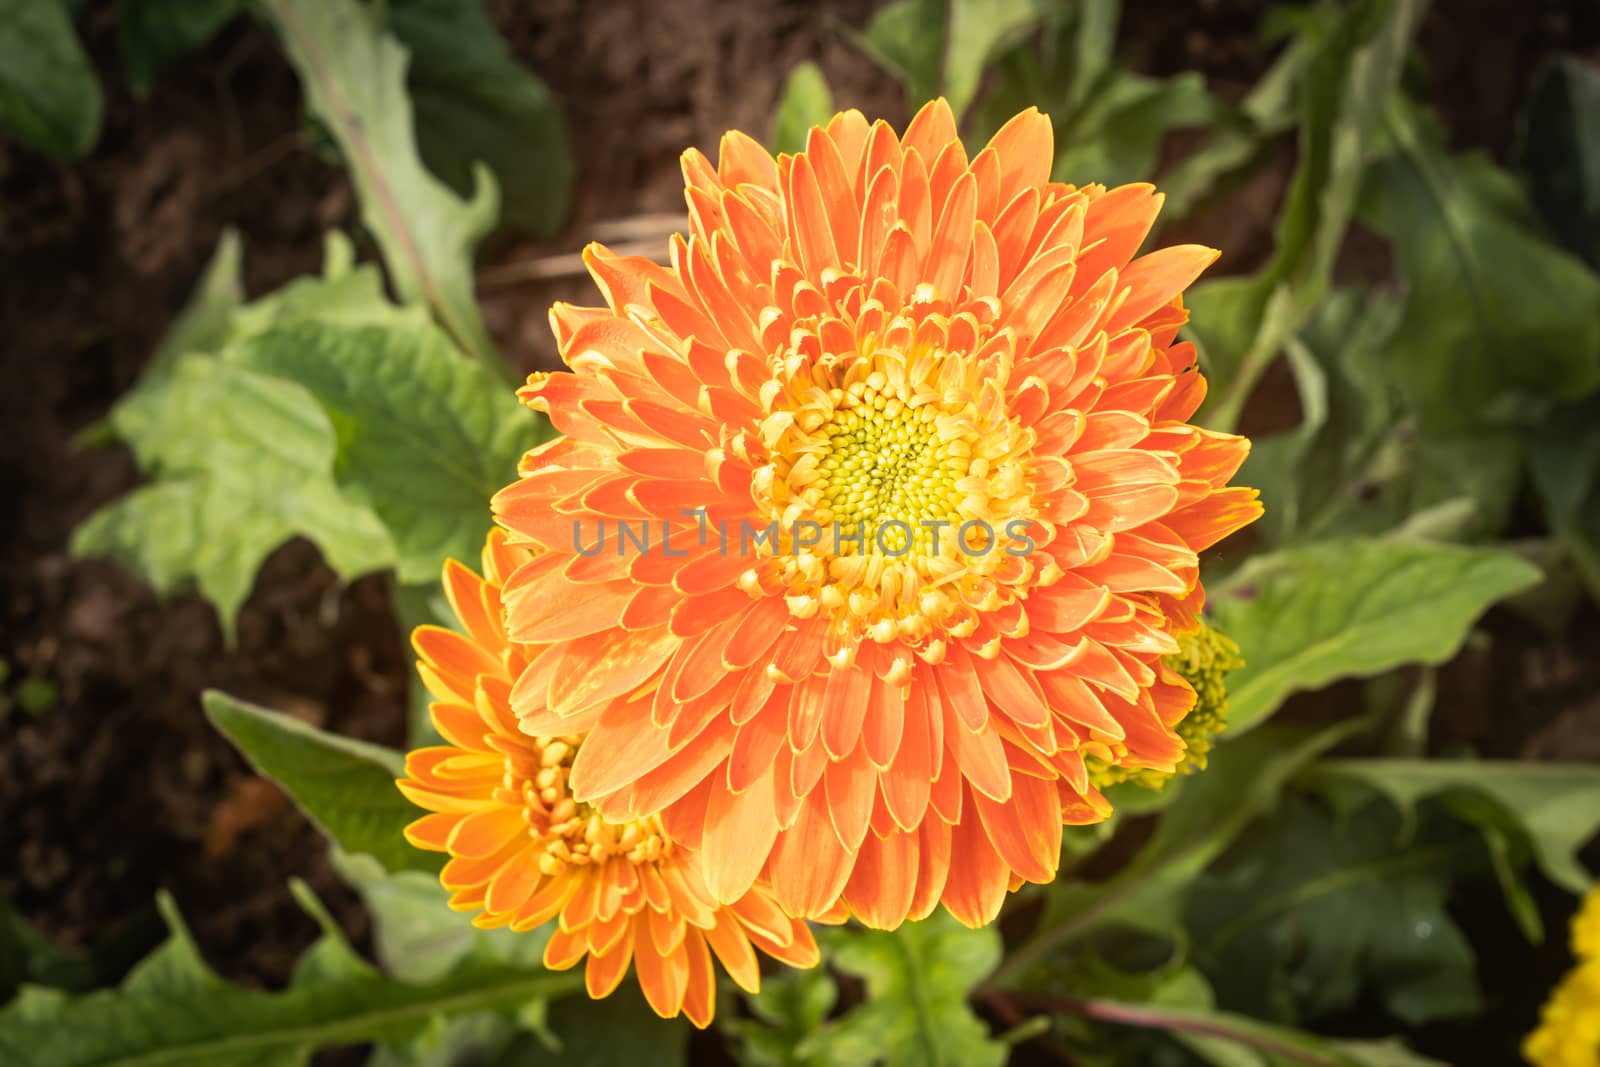 Orange Gerbera Daisy or Gerbera Flower in Garden with Natural Light on Green Leaves Background on Center Frame